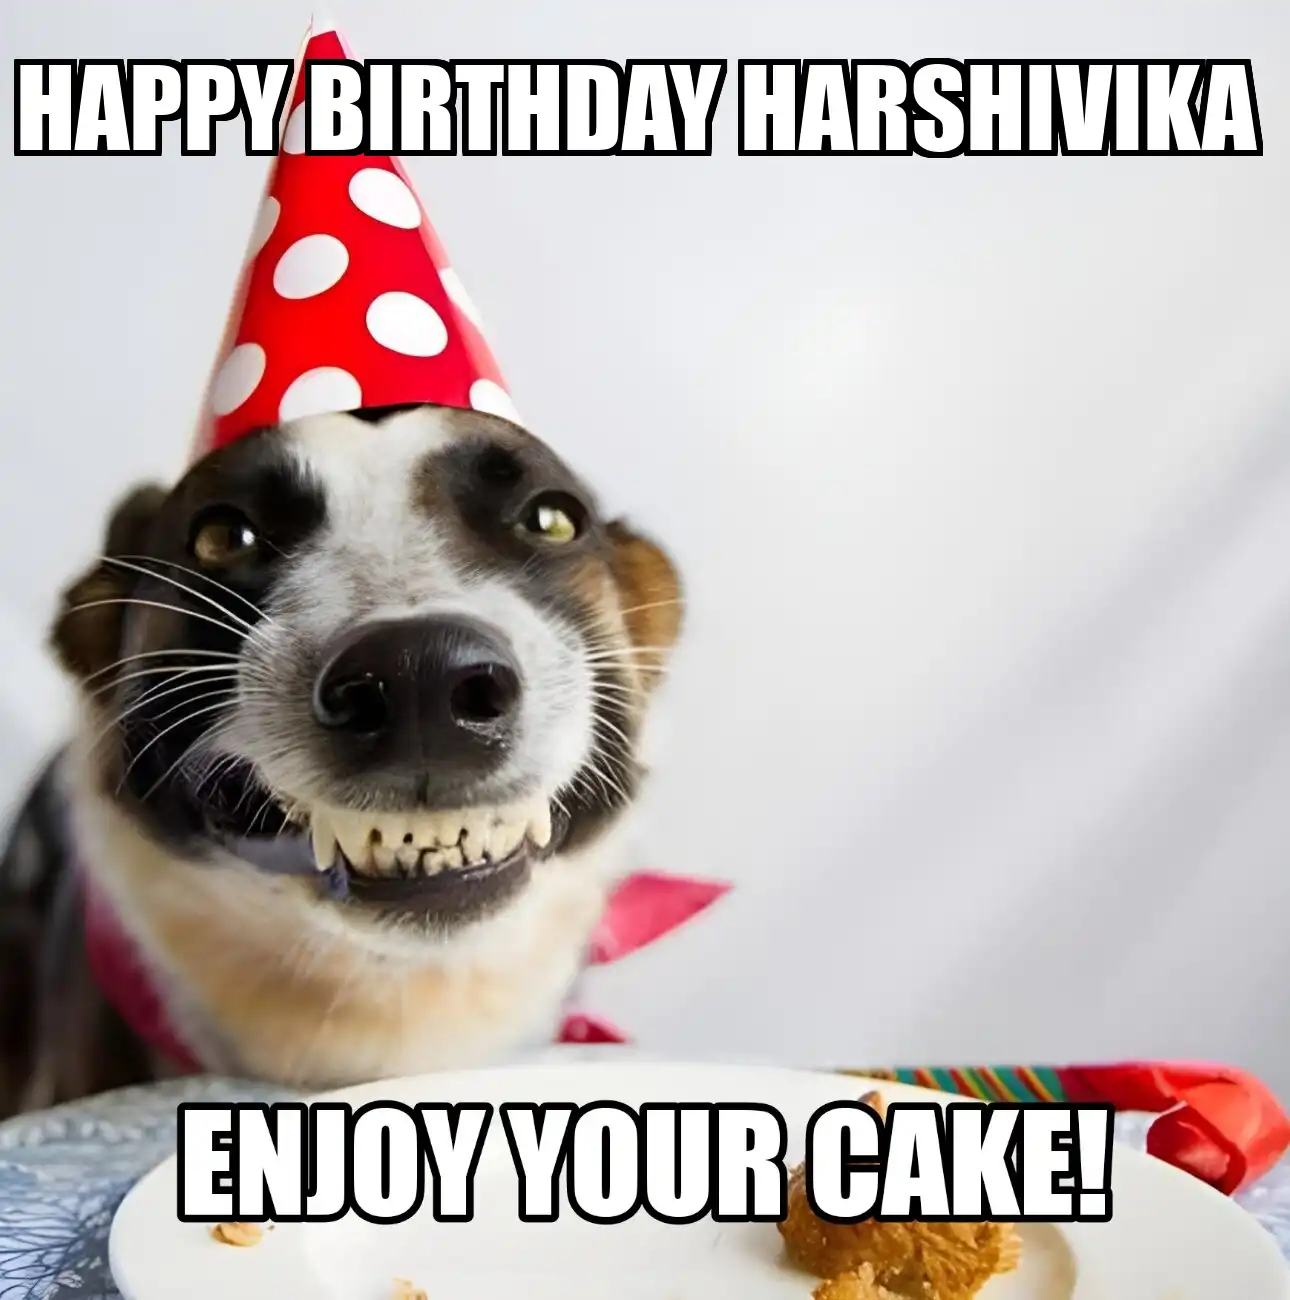 Happy Birthday Harshivika Enjoy Your Cake Dog Meme